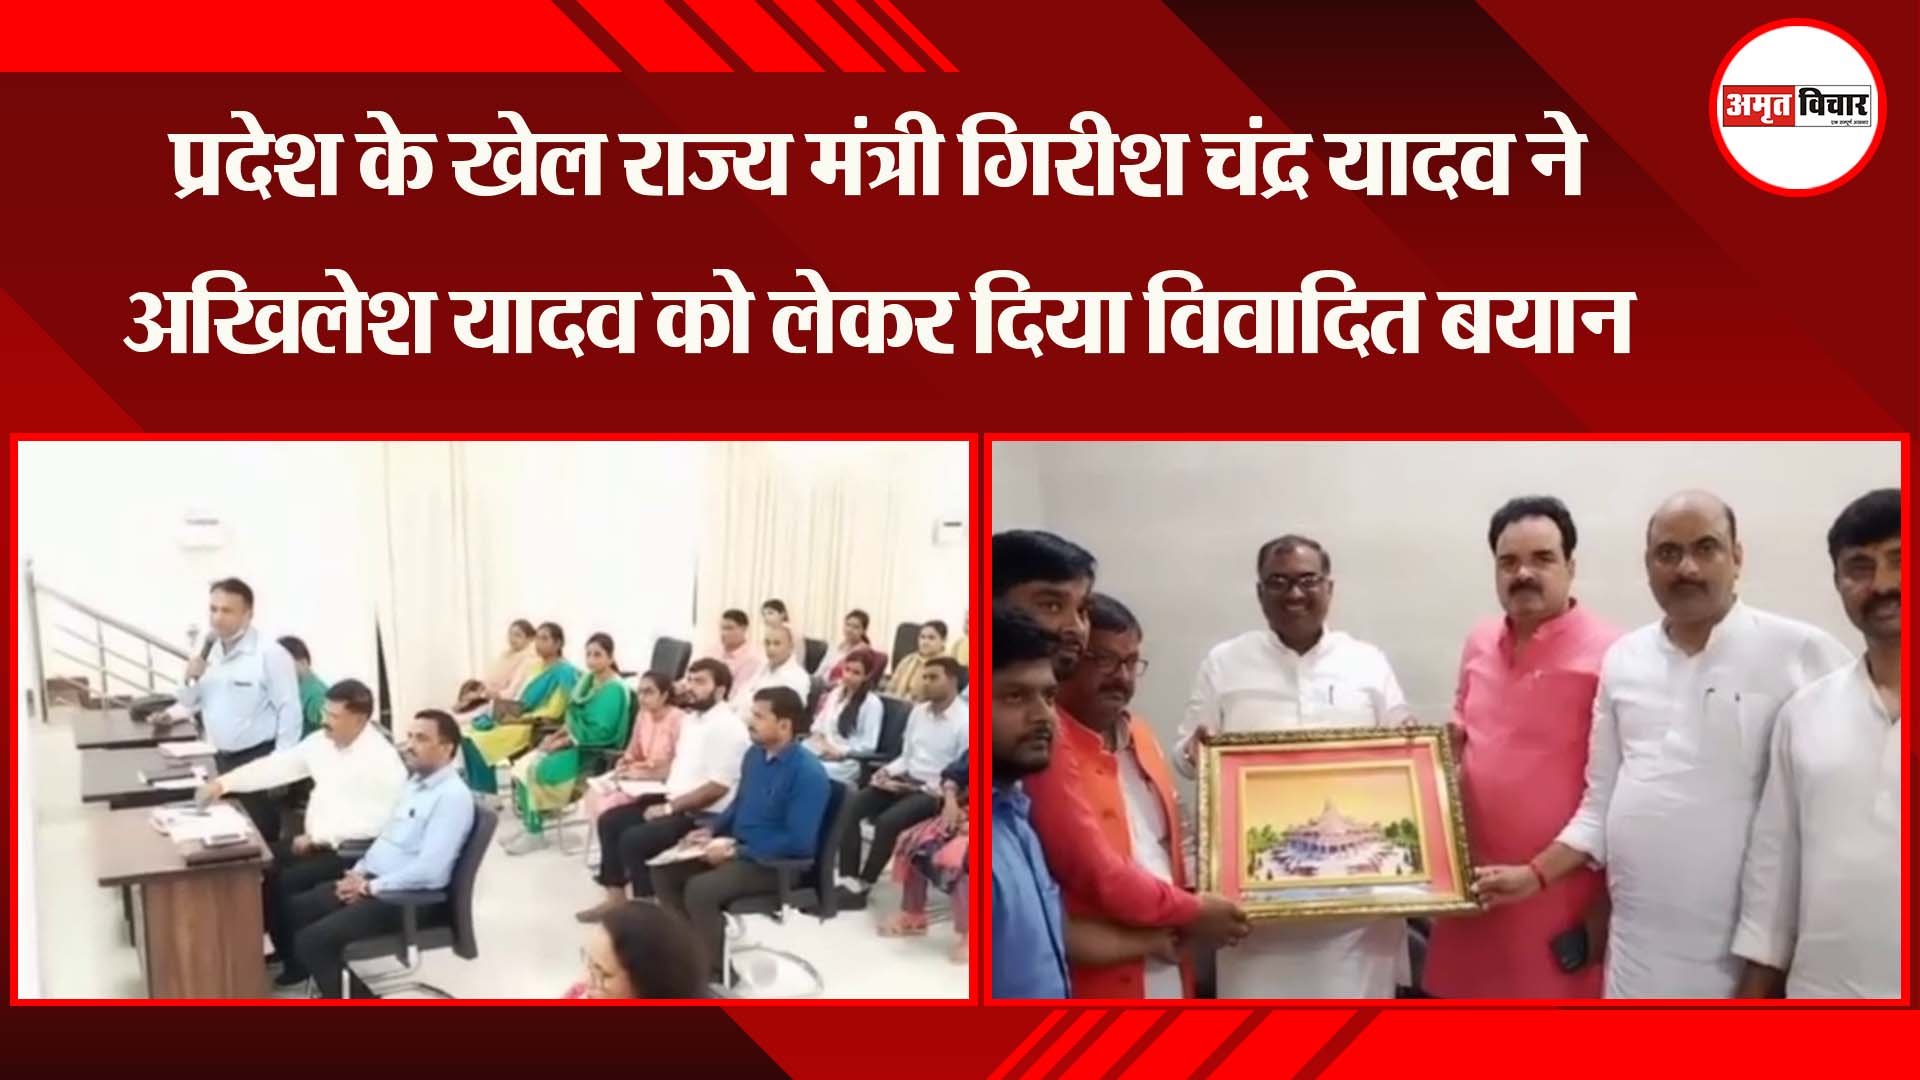 अयोध्या: प्रदेश के खेल राज्य मंत्री गिरीश चंद्र यादव ने अखिलेश यादव को लेकर दिया विवादित बयान